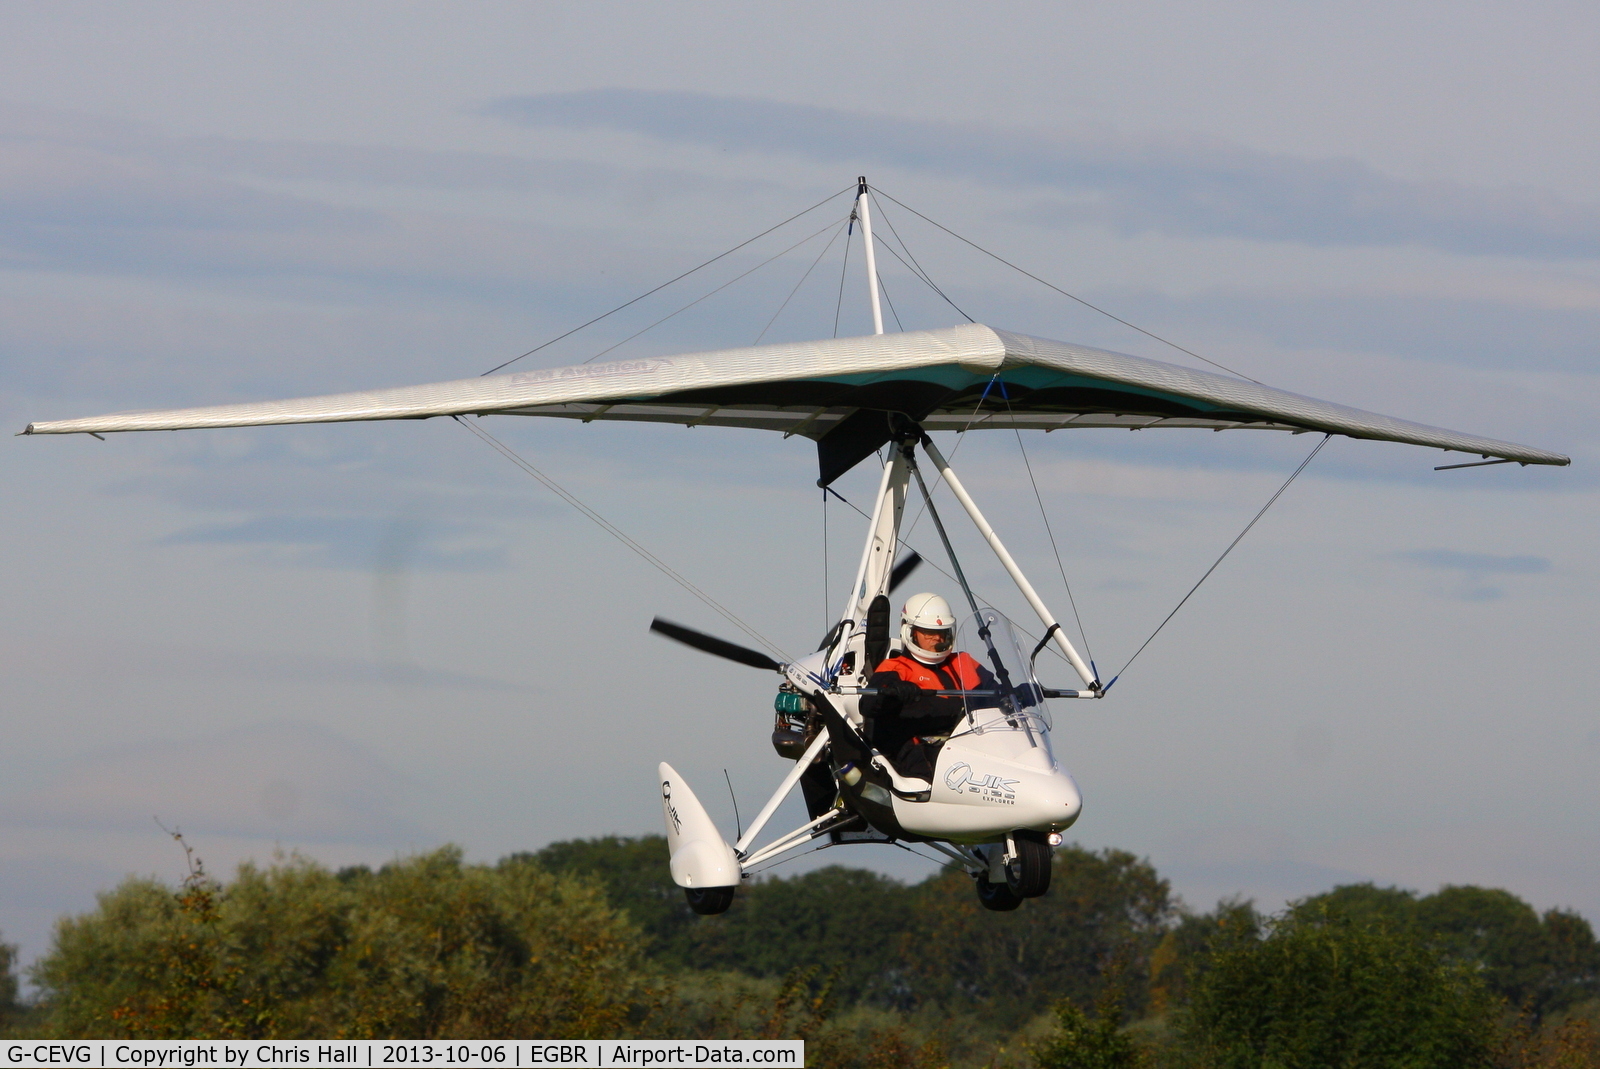 G-CEVG, 2007 Pegasus Quik C/N 8319, at Breighton's Pre Hibernation Fly-in, 2013